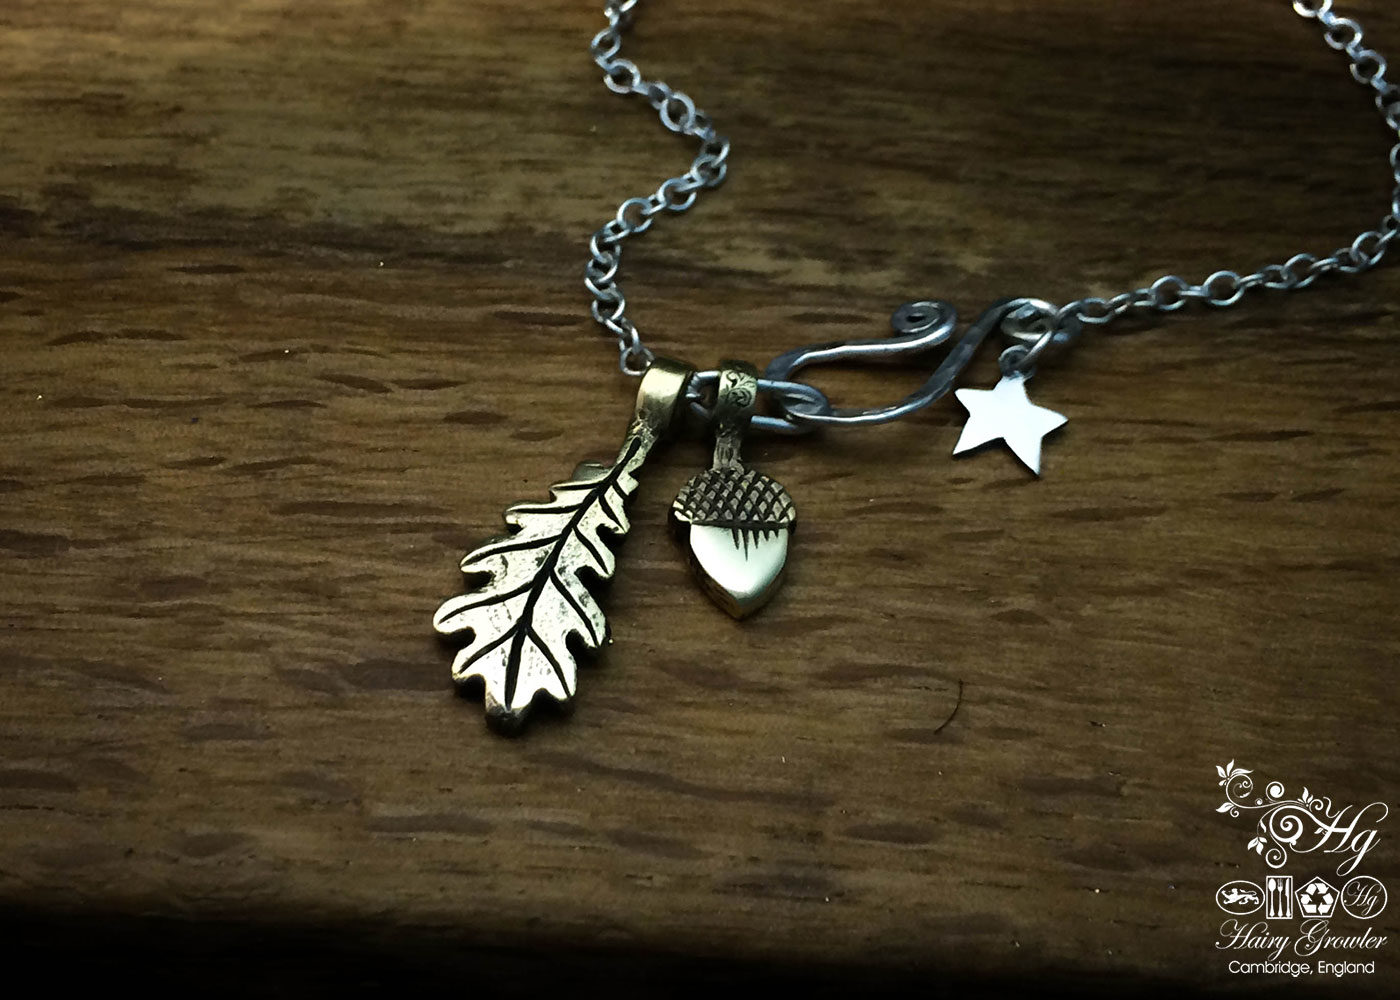 handcrafted silver oak leaf charm for a tree sculpture, necklace or bracelet